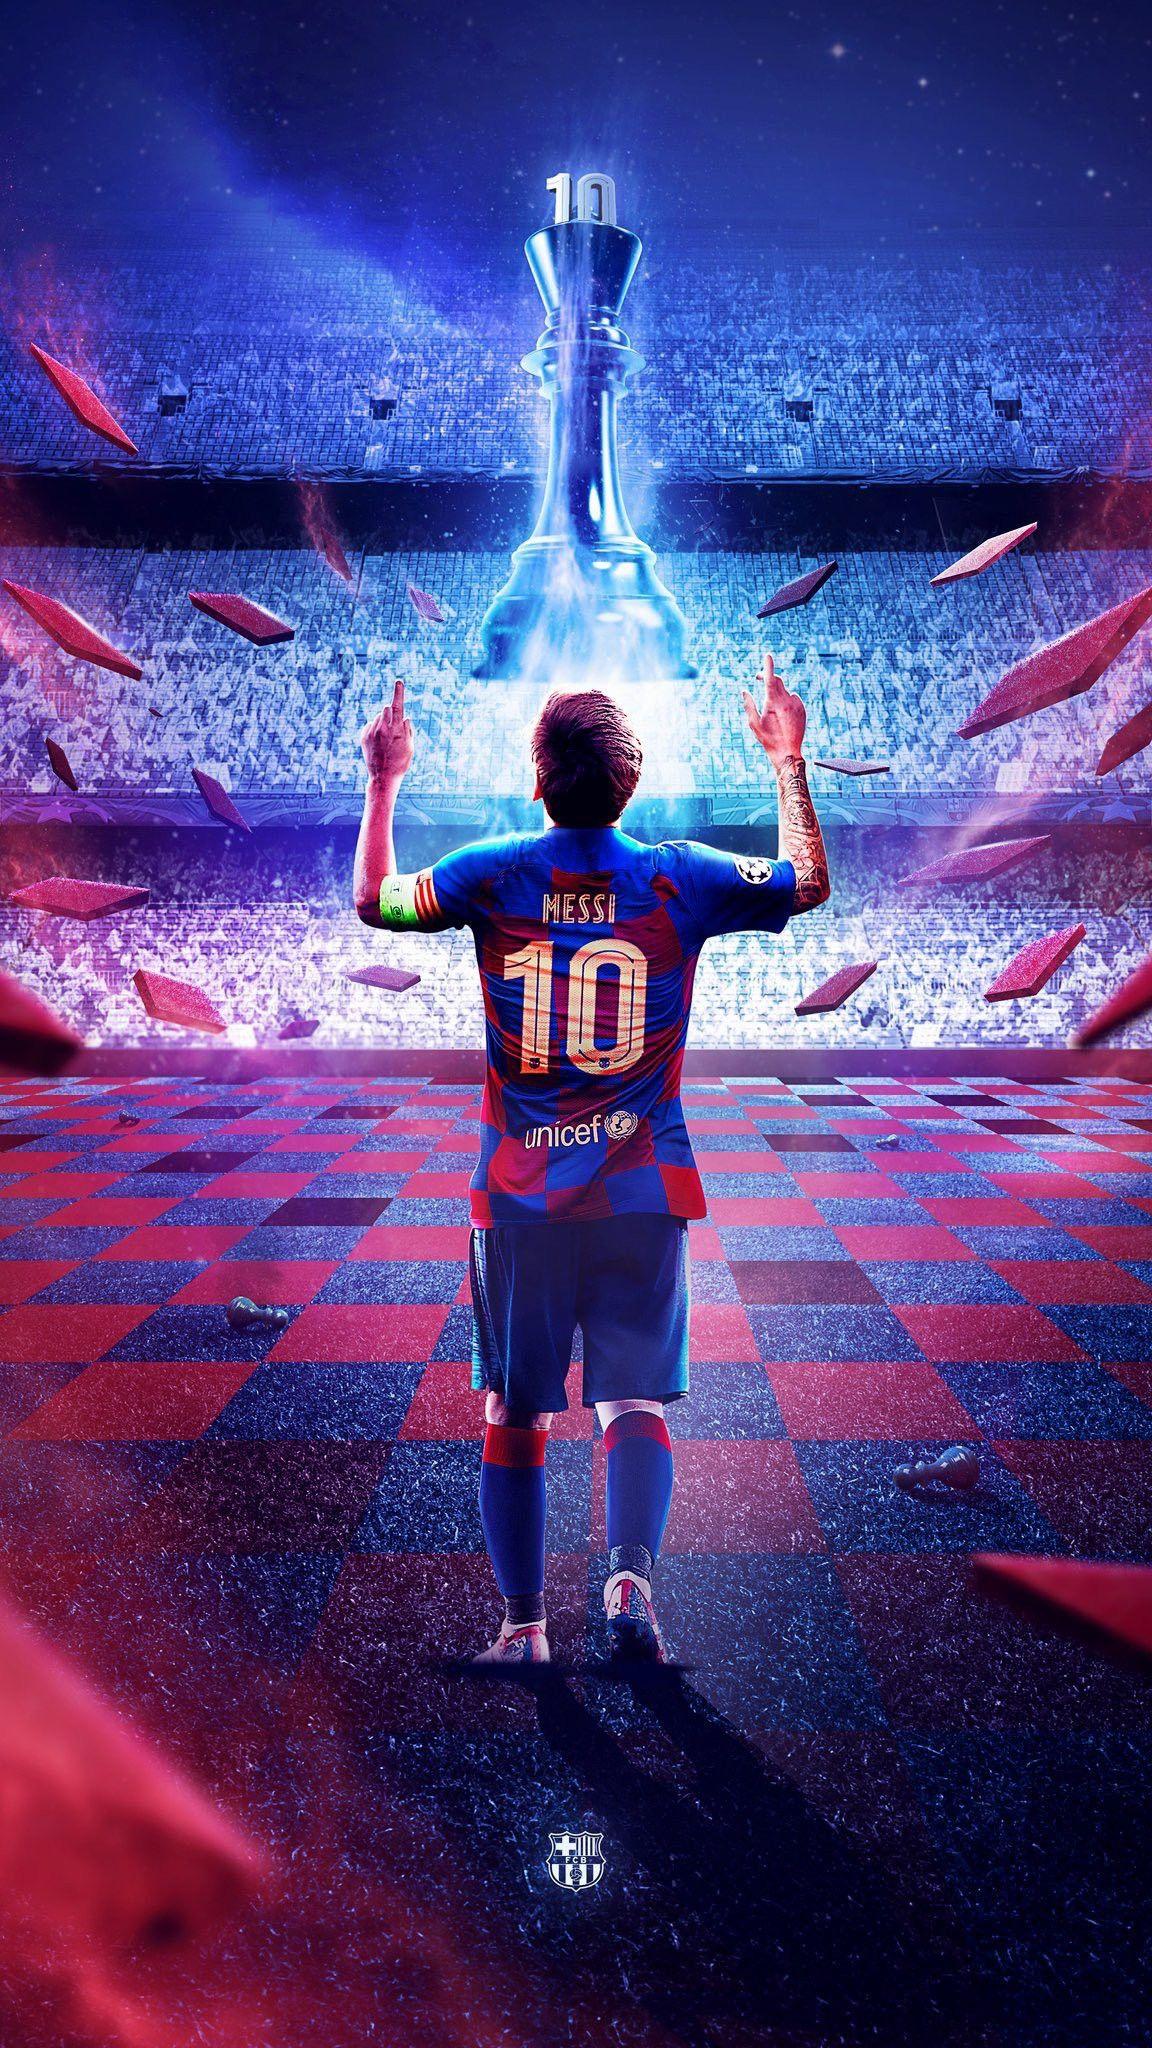 Messi wallpaper HD download. Lionel messi wallpaper, Lionel messi, Messi vs ronaldo